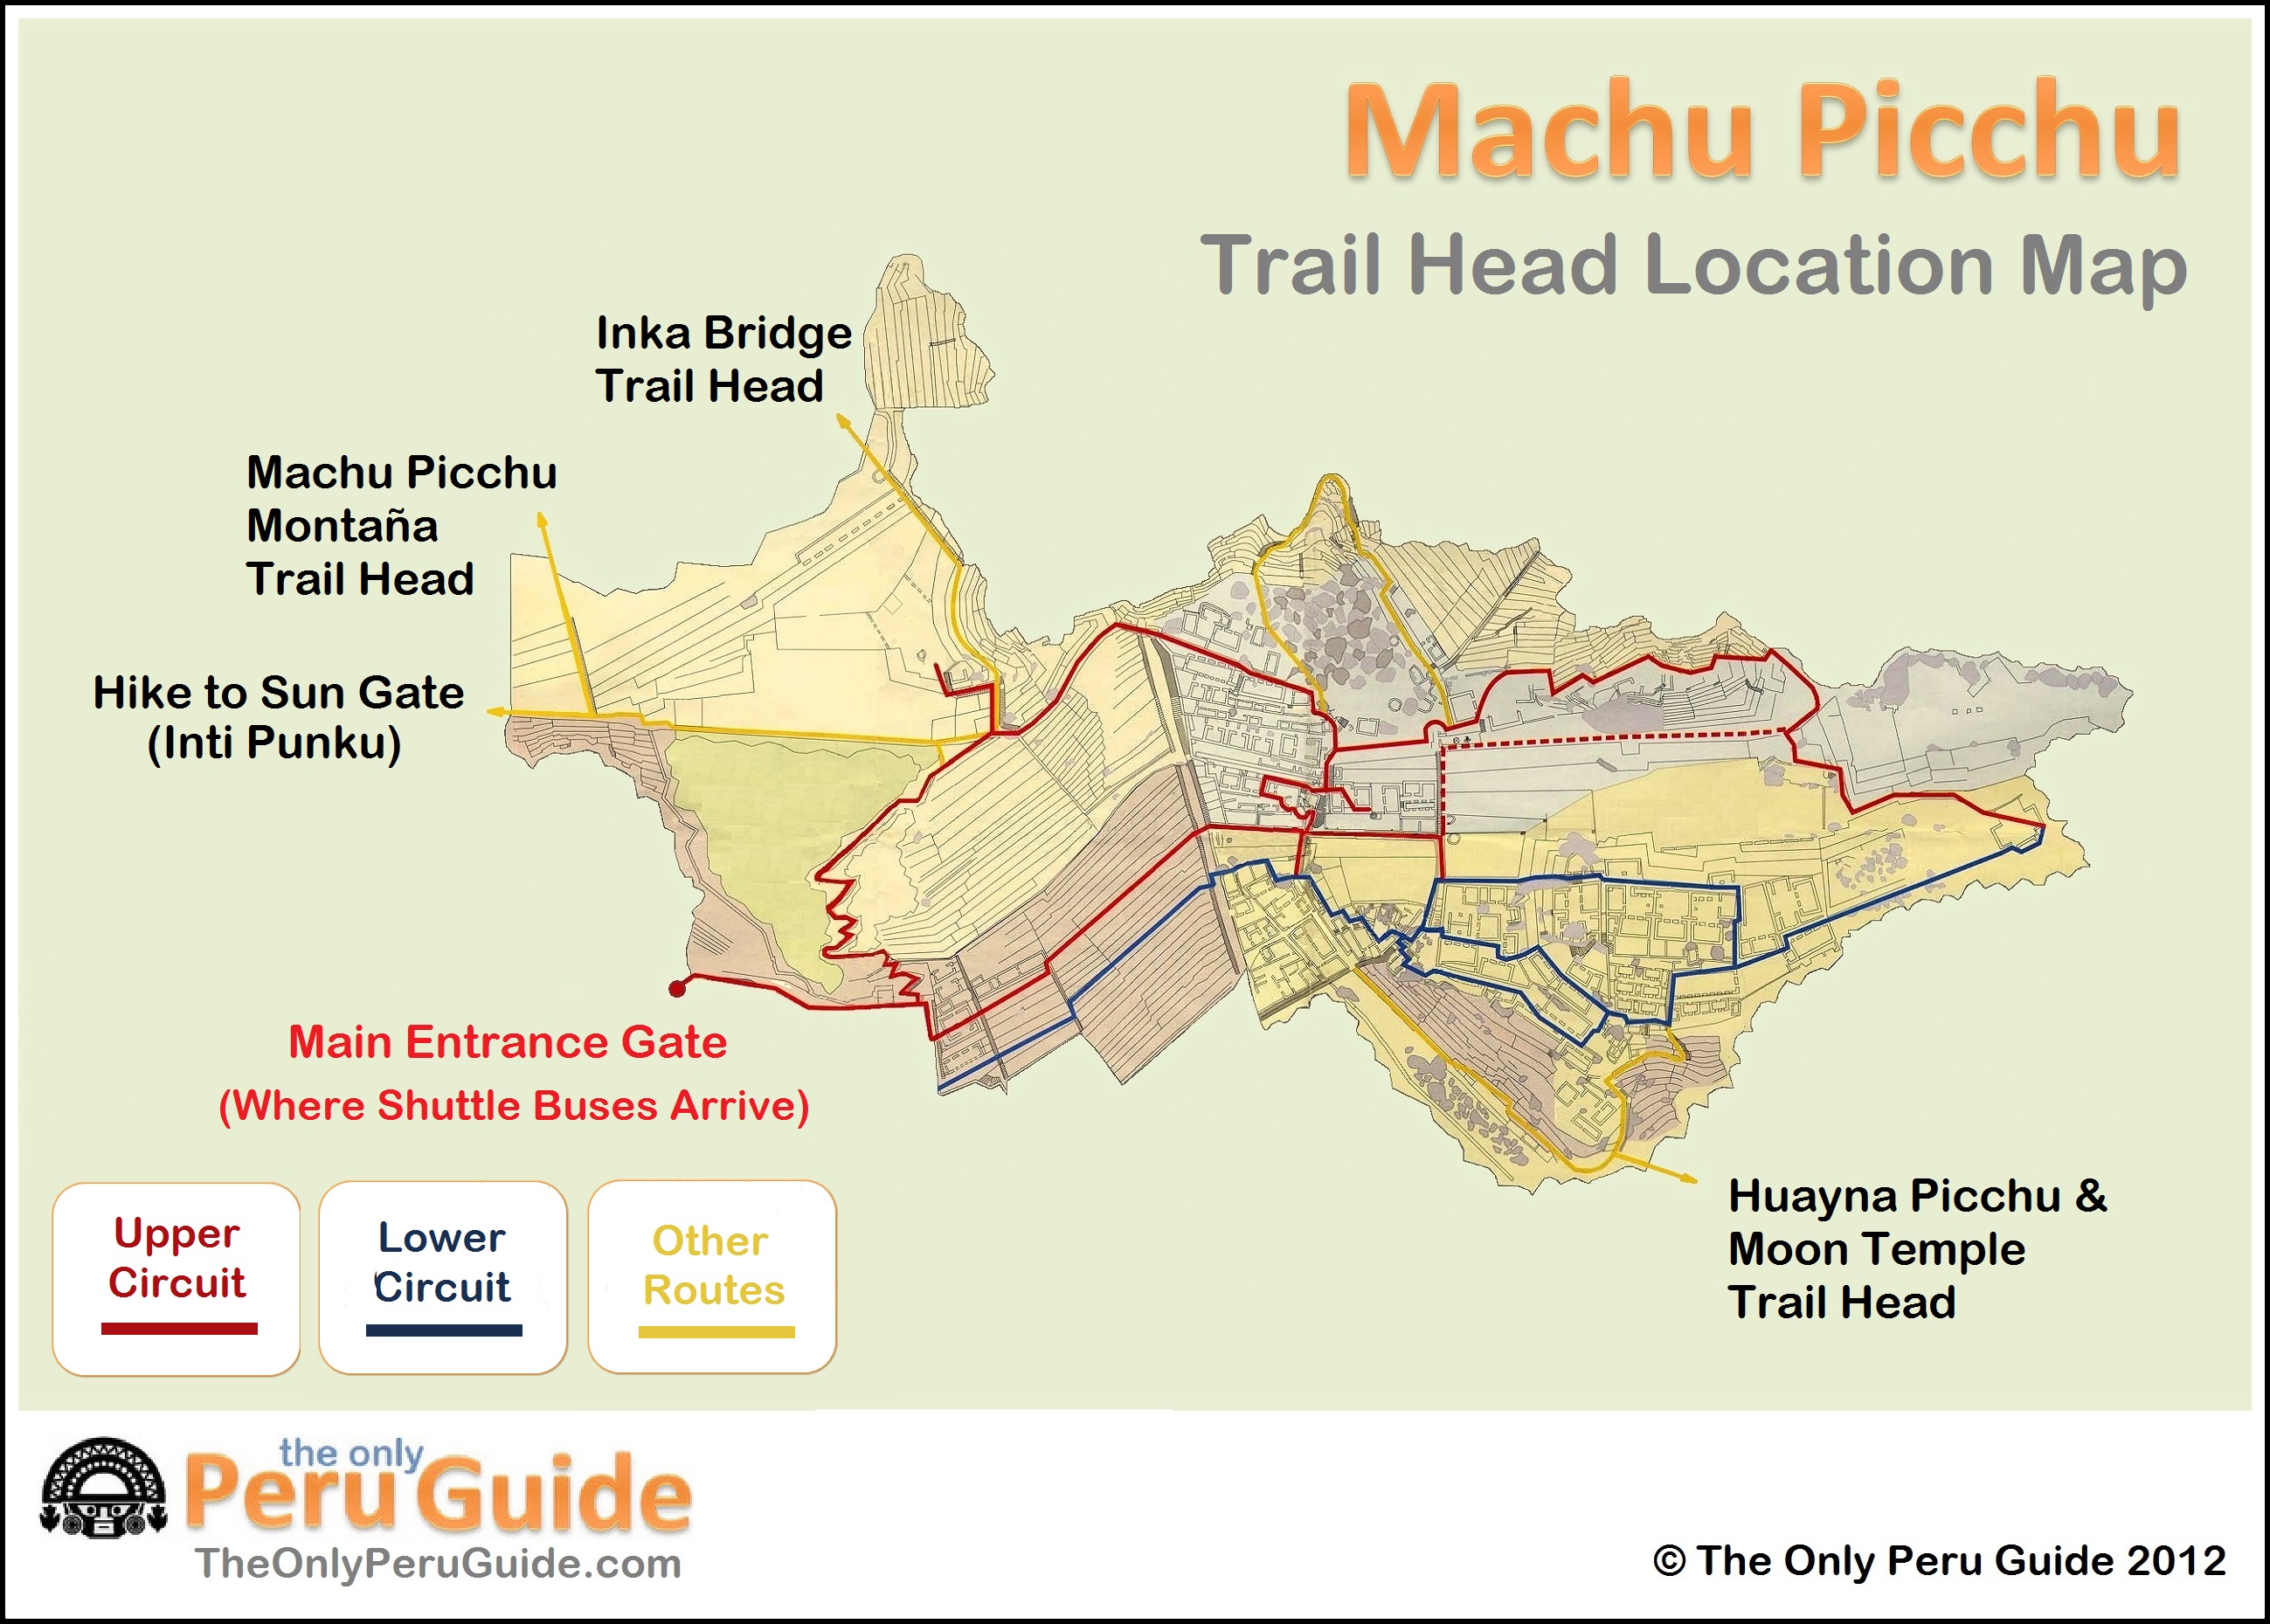 Trail head location map